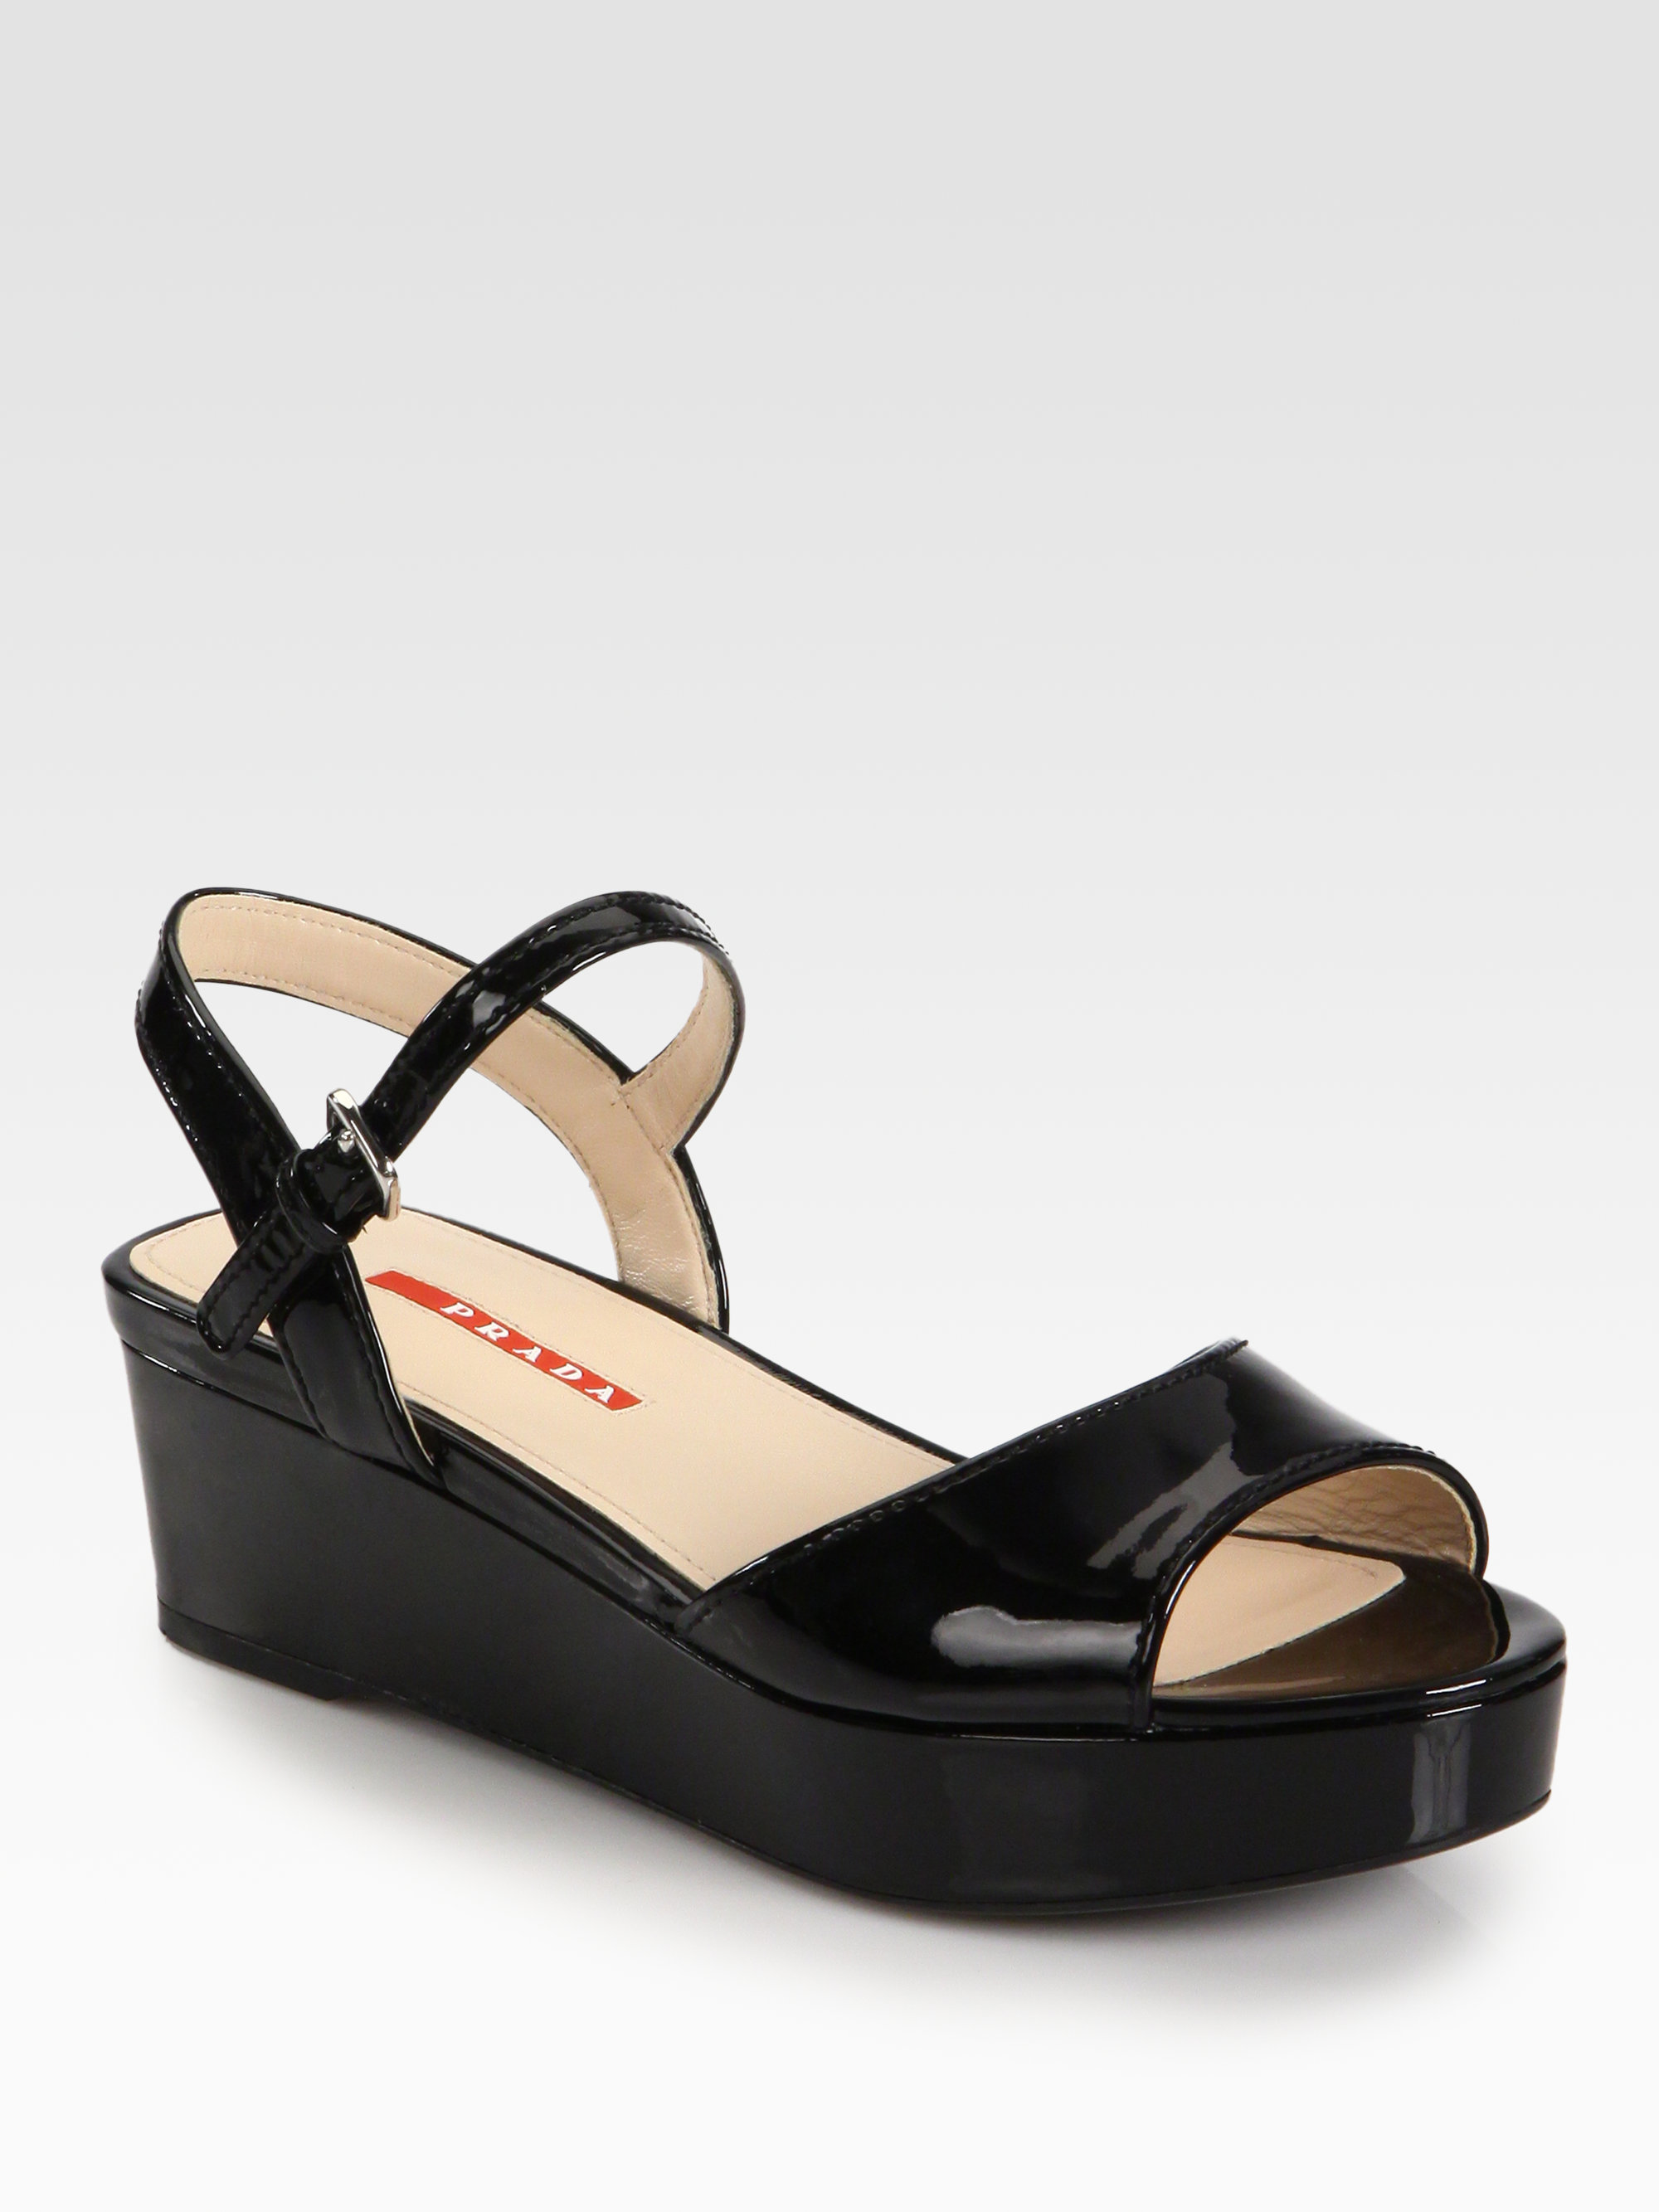 Prada Patent Leather Platform Sandals in Black (nero-black) | Lyst